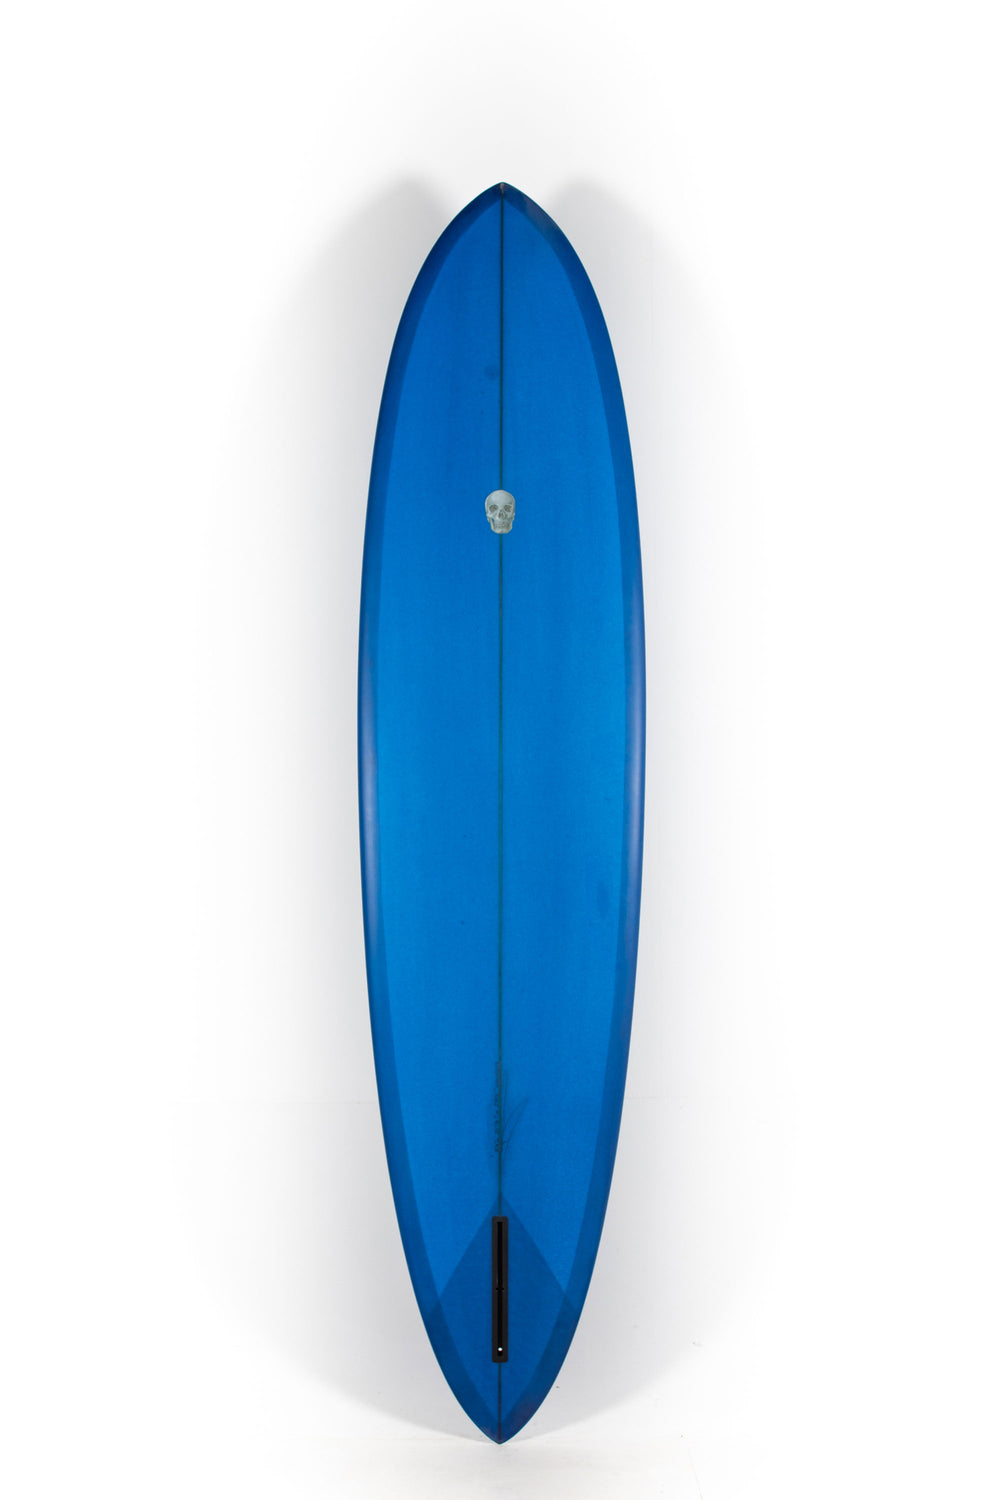 Christenson Surfboards - C-BUCKET - 8'0